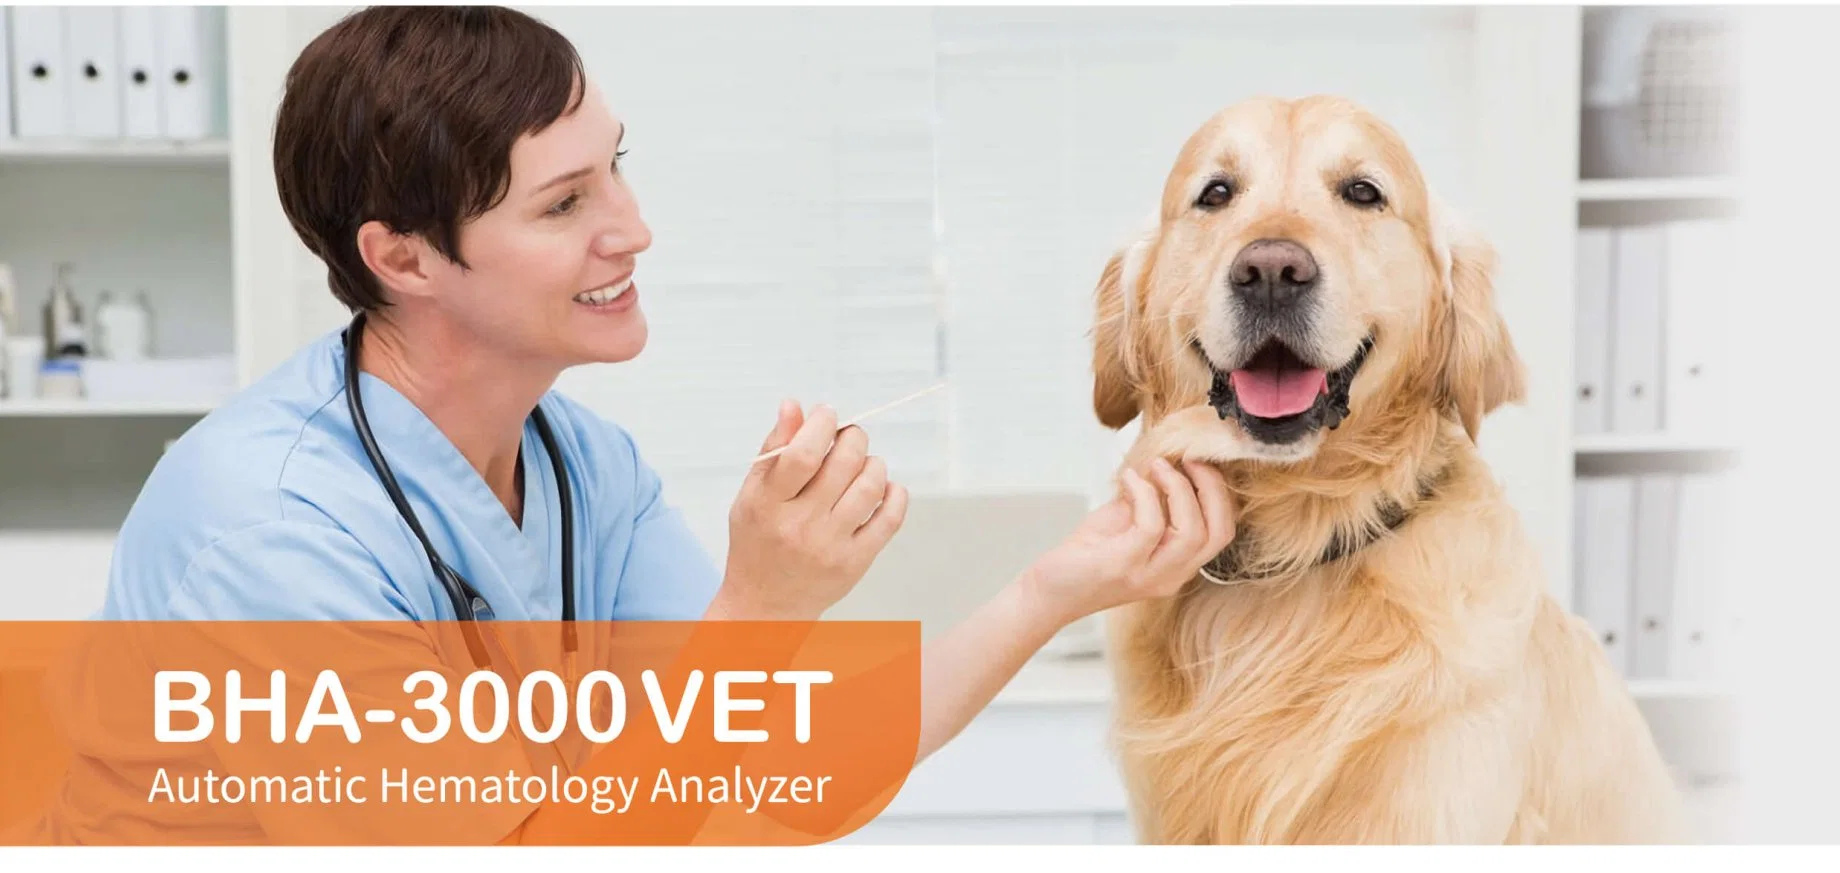 Getein Veterinary Hematology Analyzer BHA-3000 Vet 3 Part Differential Cbc Test Automated Blood Analysis